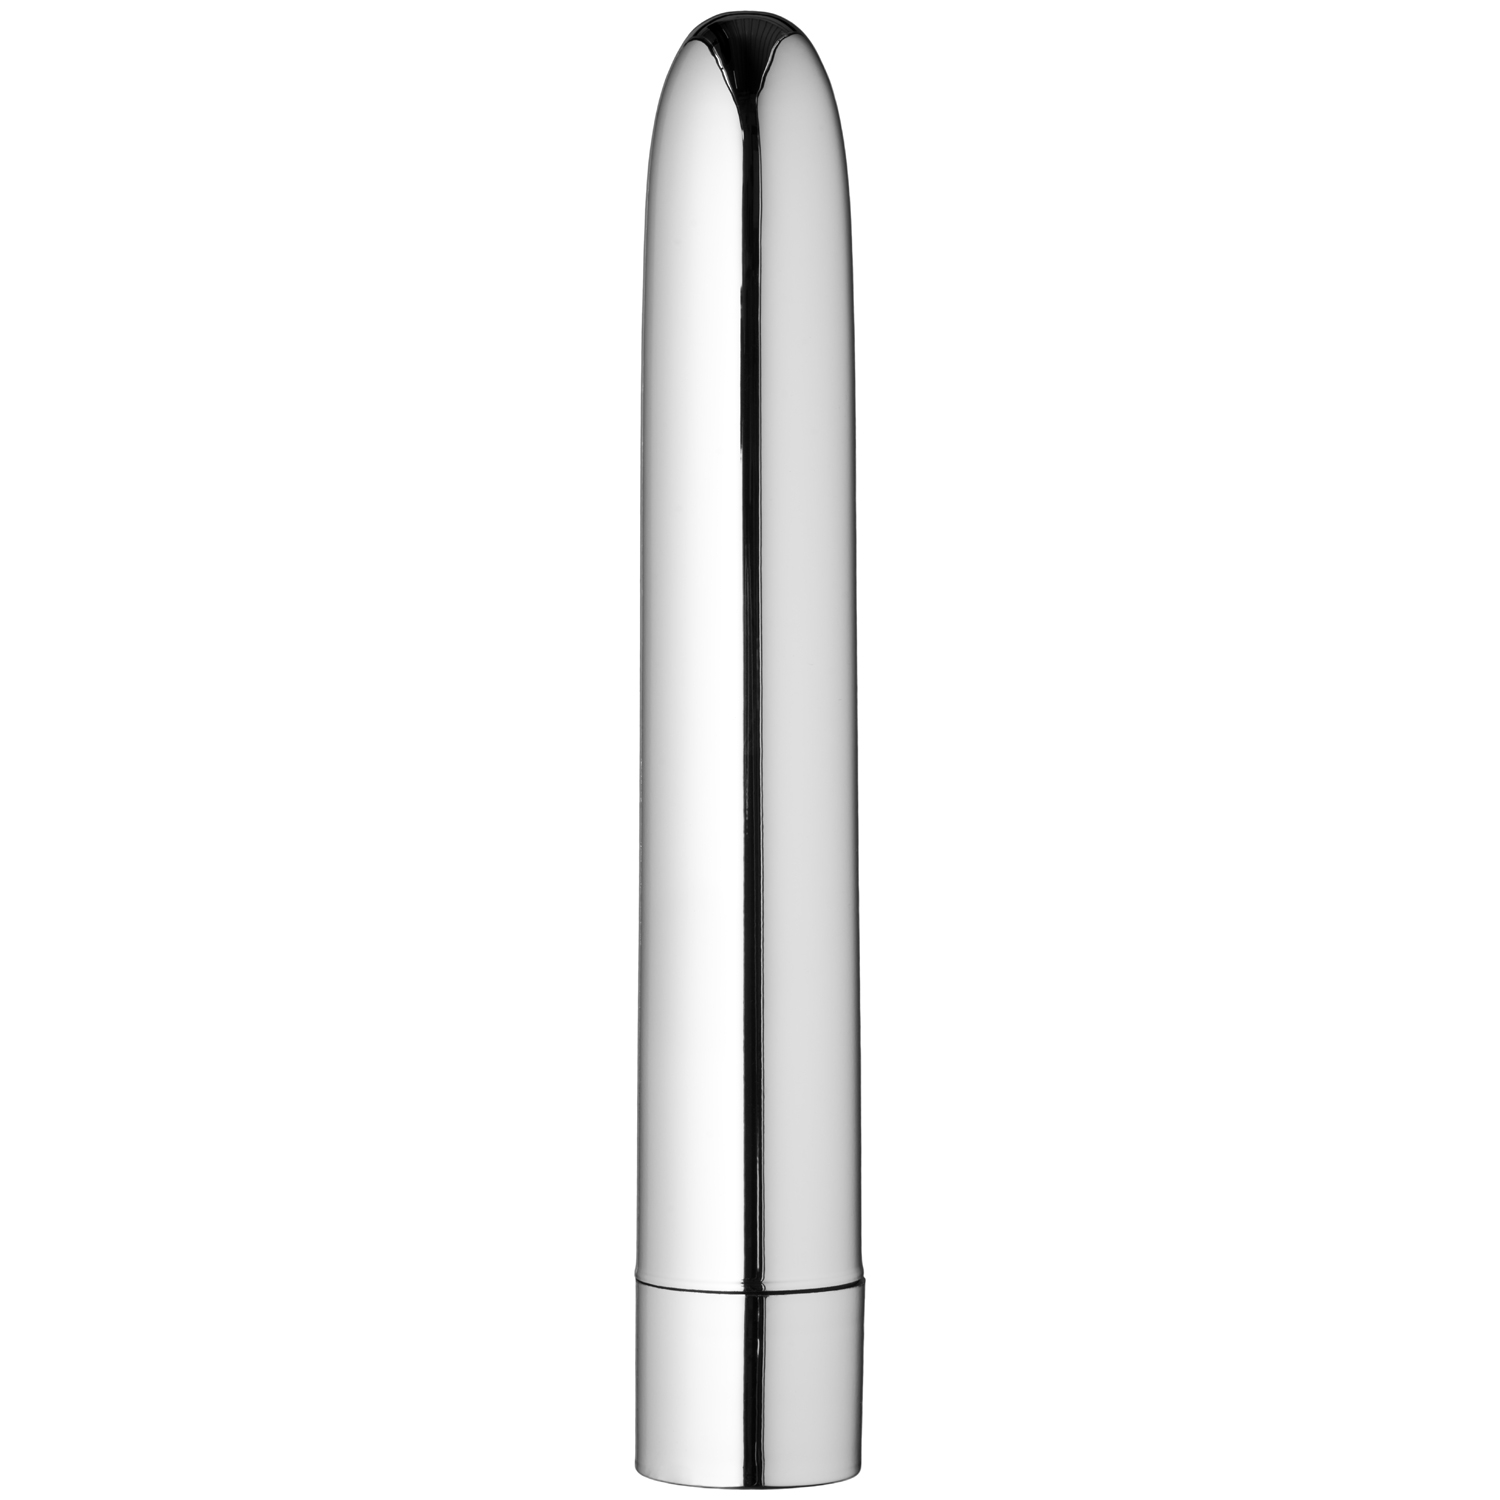 Sinful Sølv Klassisk 10 Funktions Dildo Vibrator    - Sølv